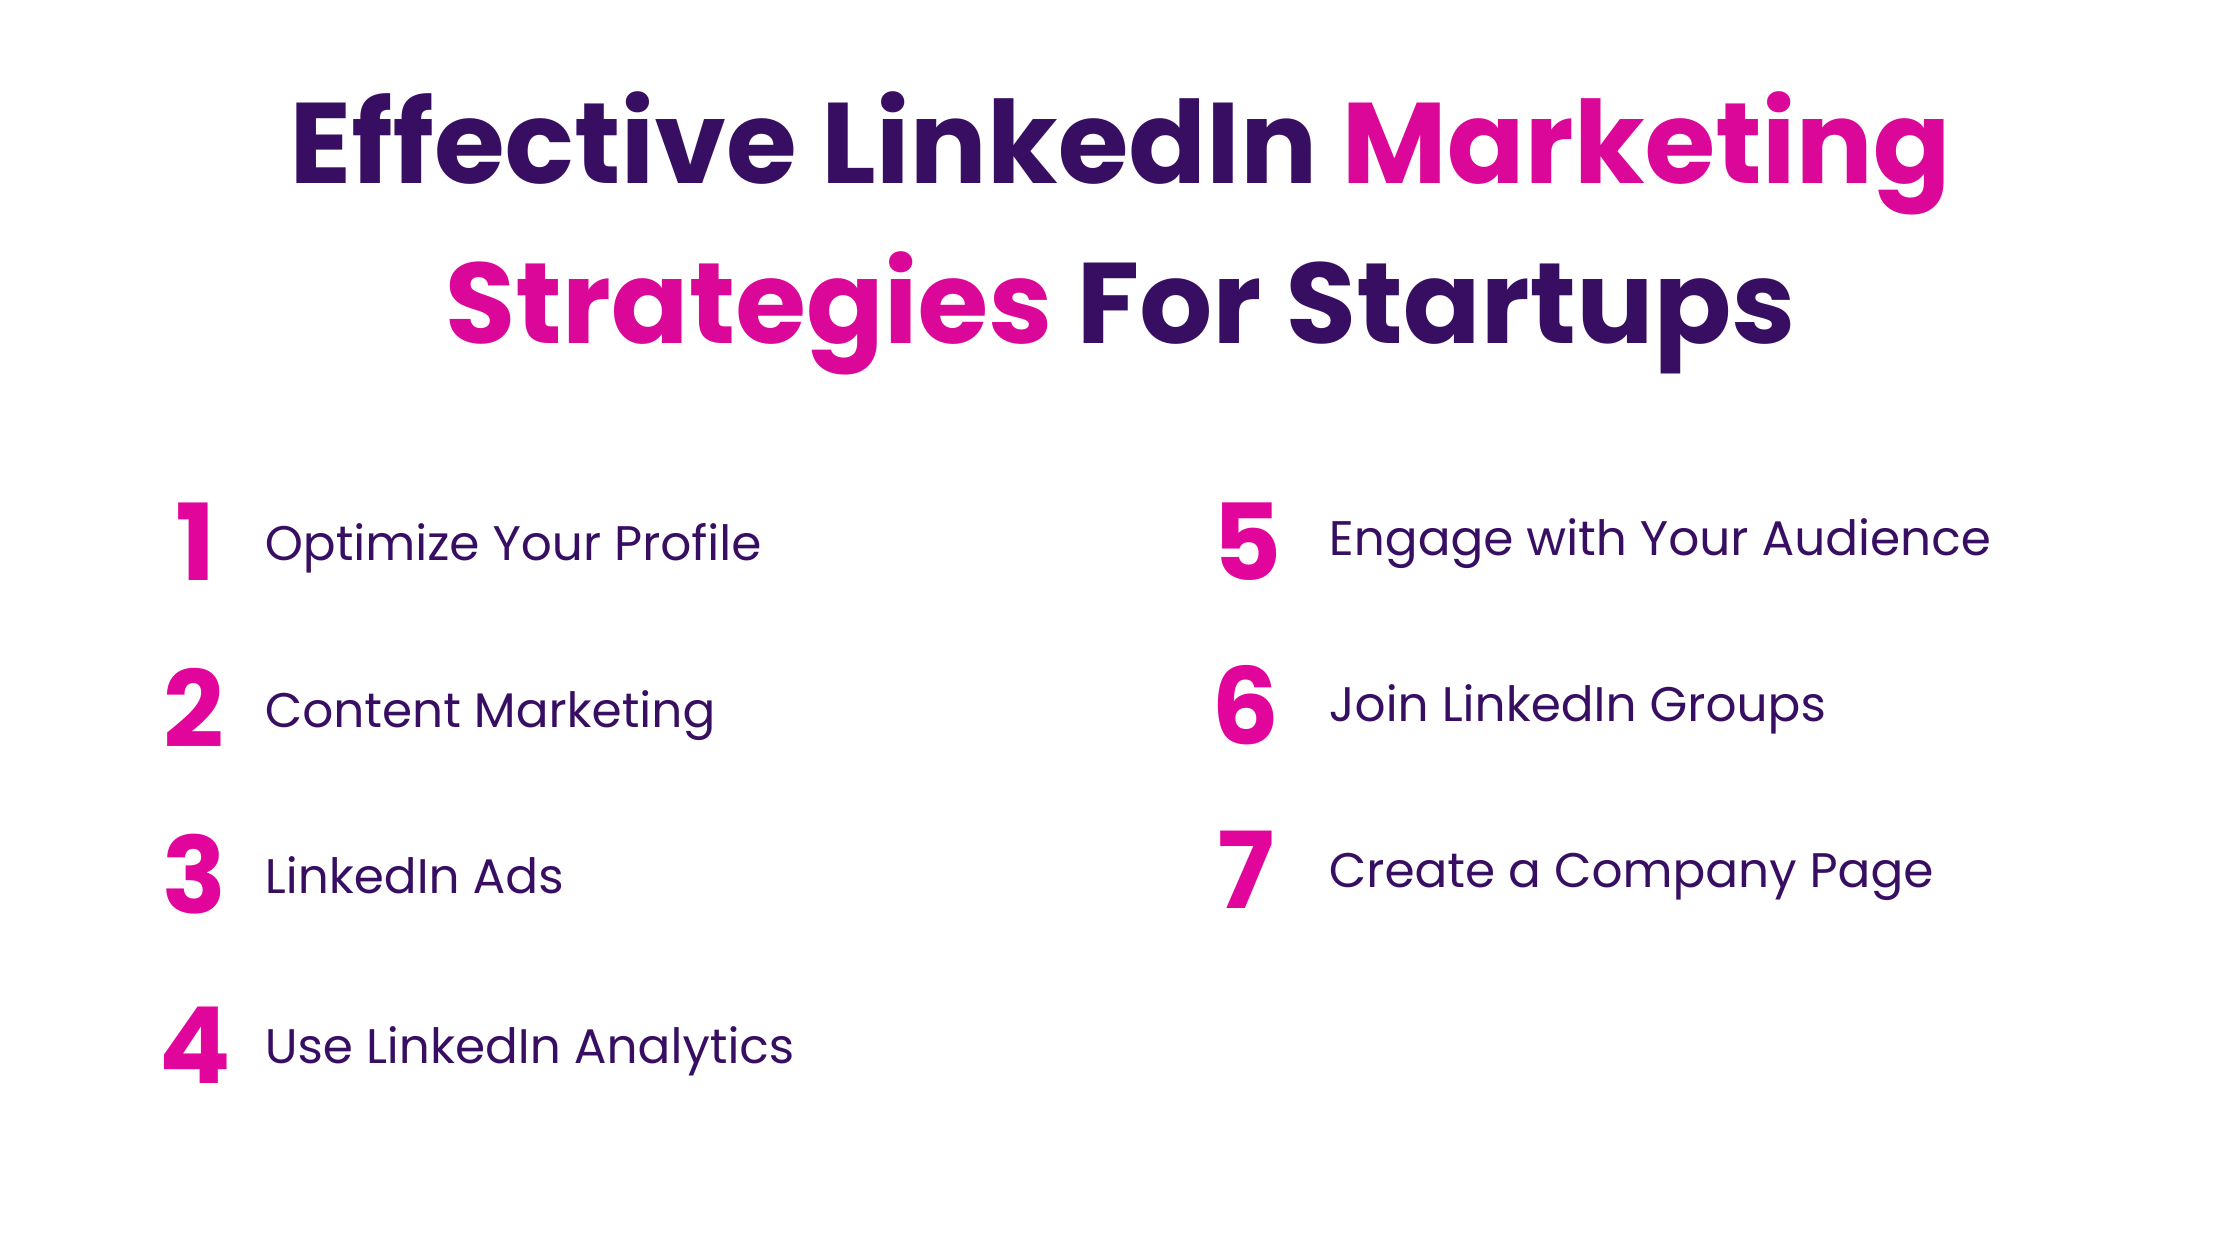 Effective LinkedIn Marketing Strategies For Startups